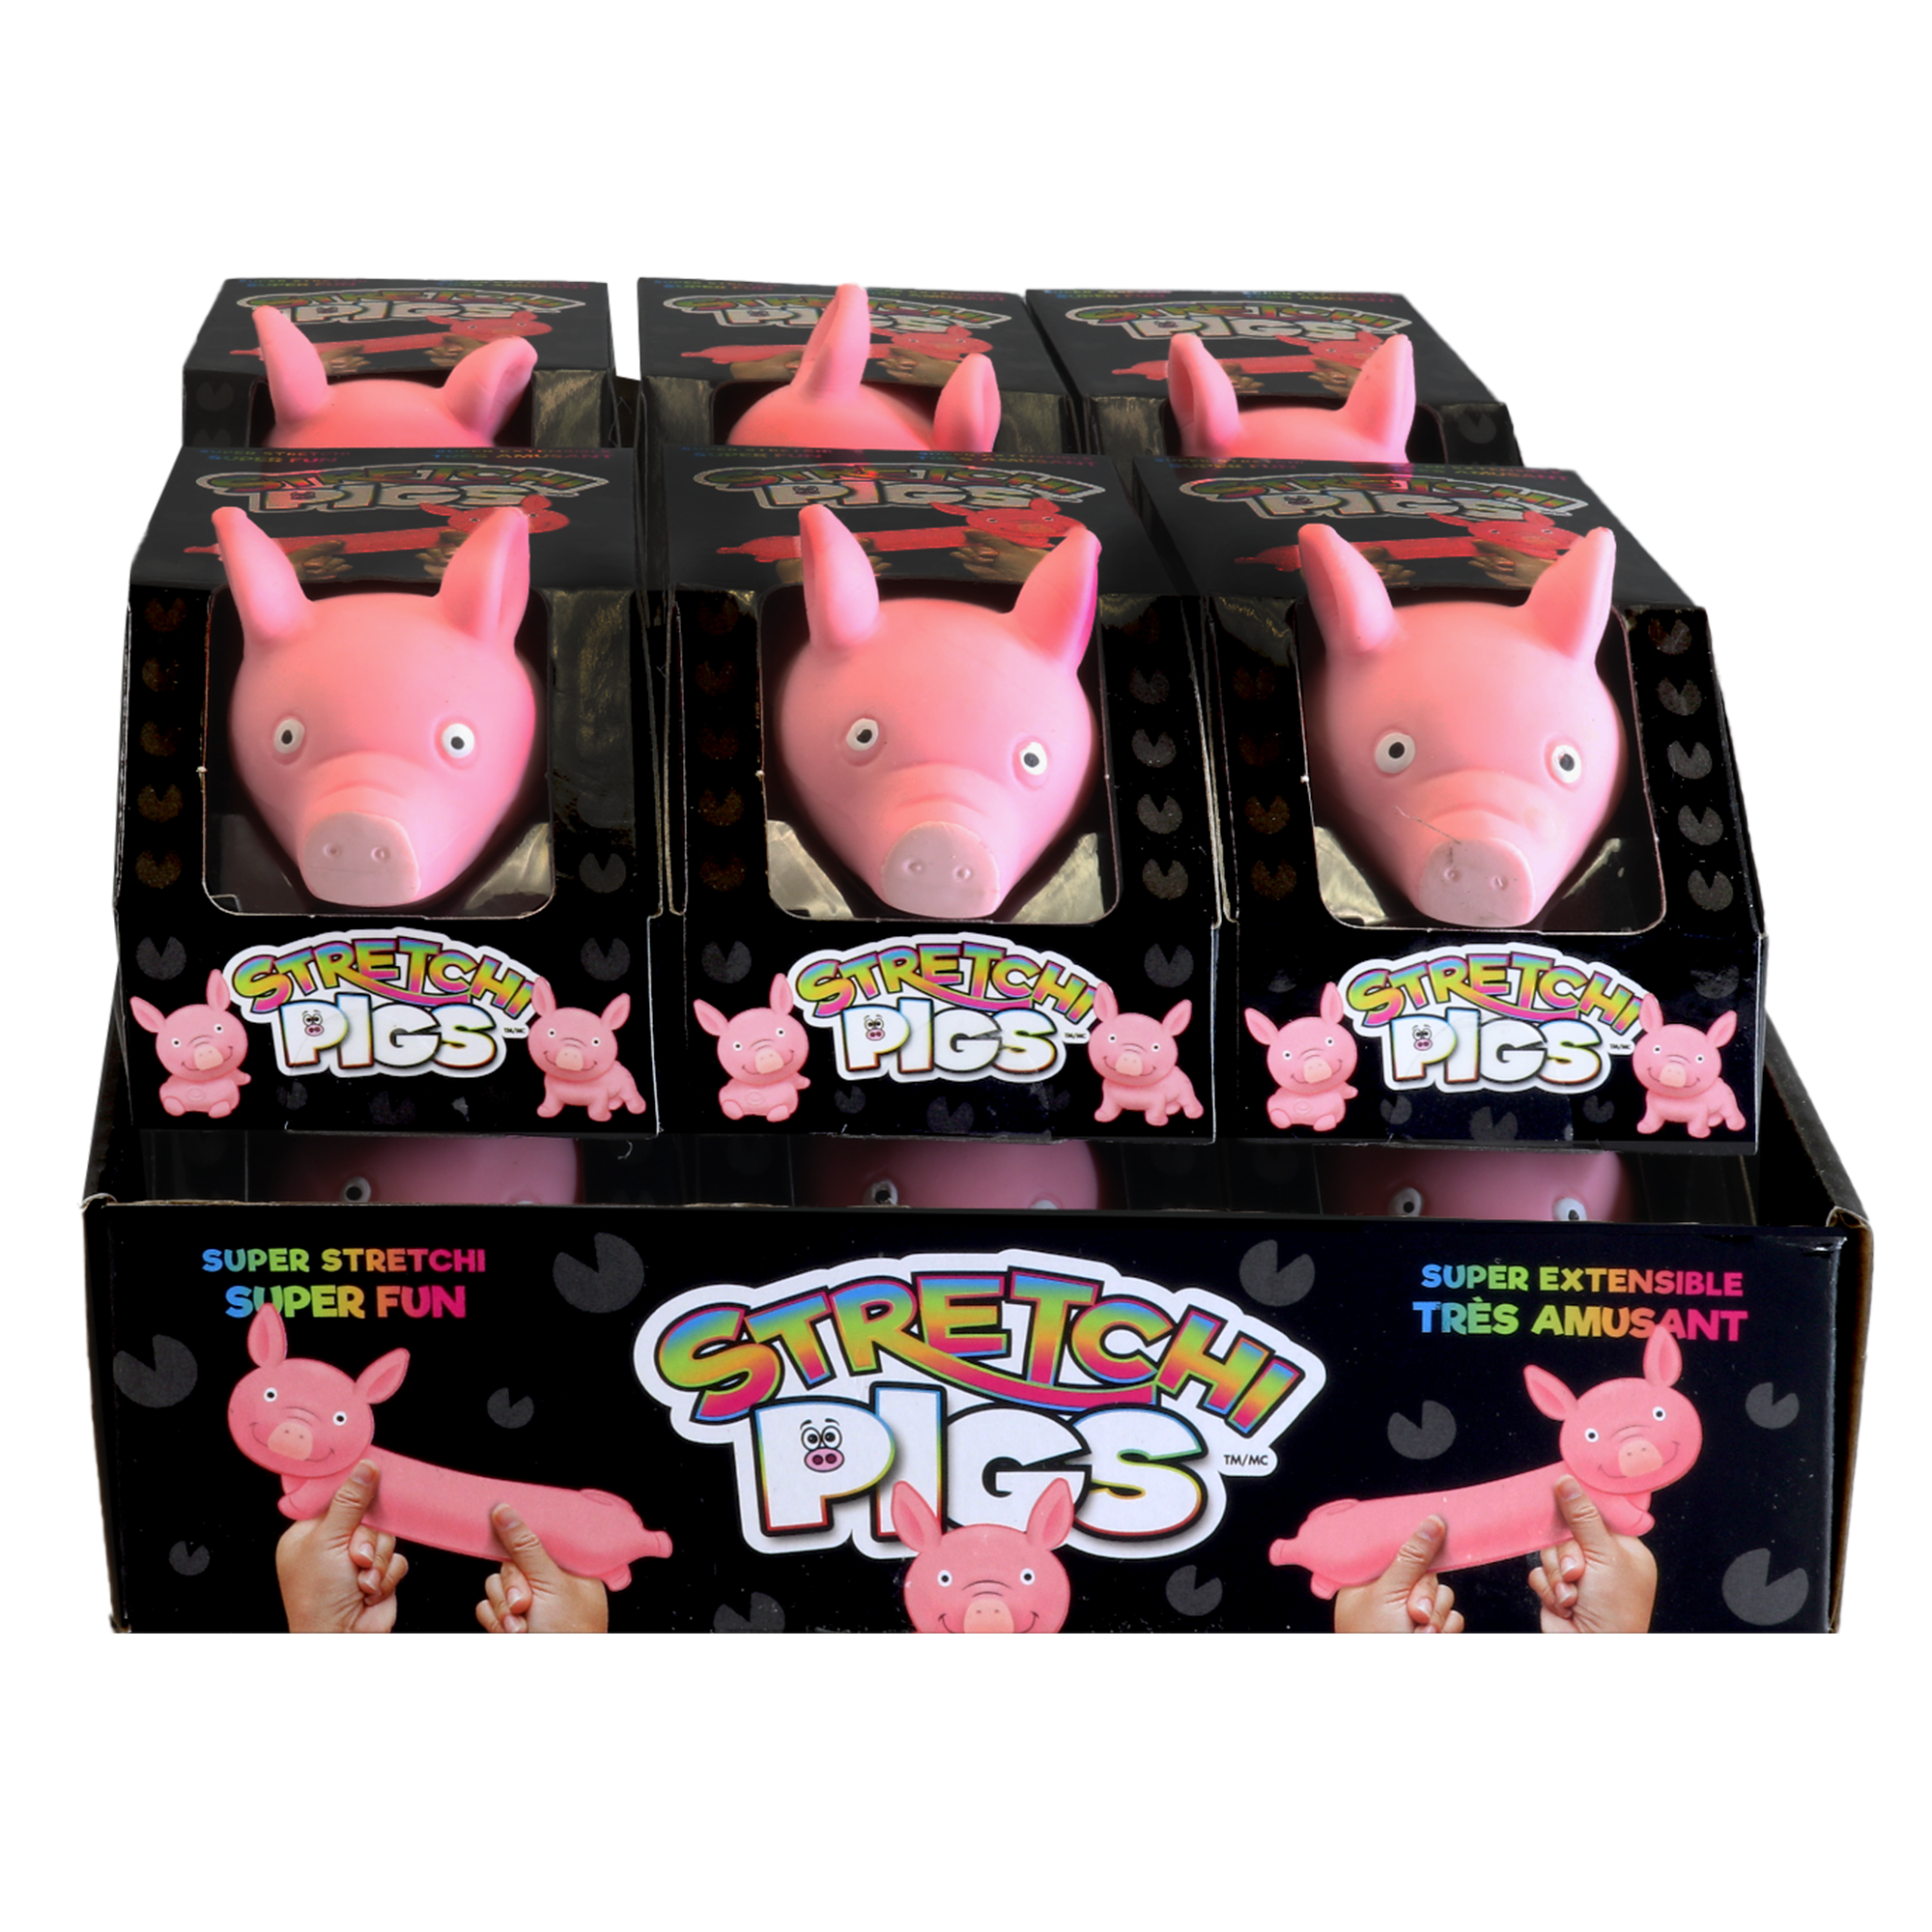 Stretchi Pigs